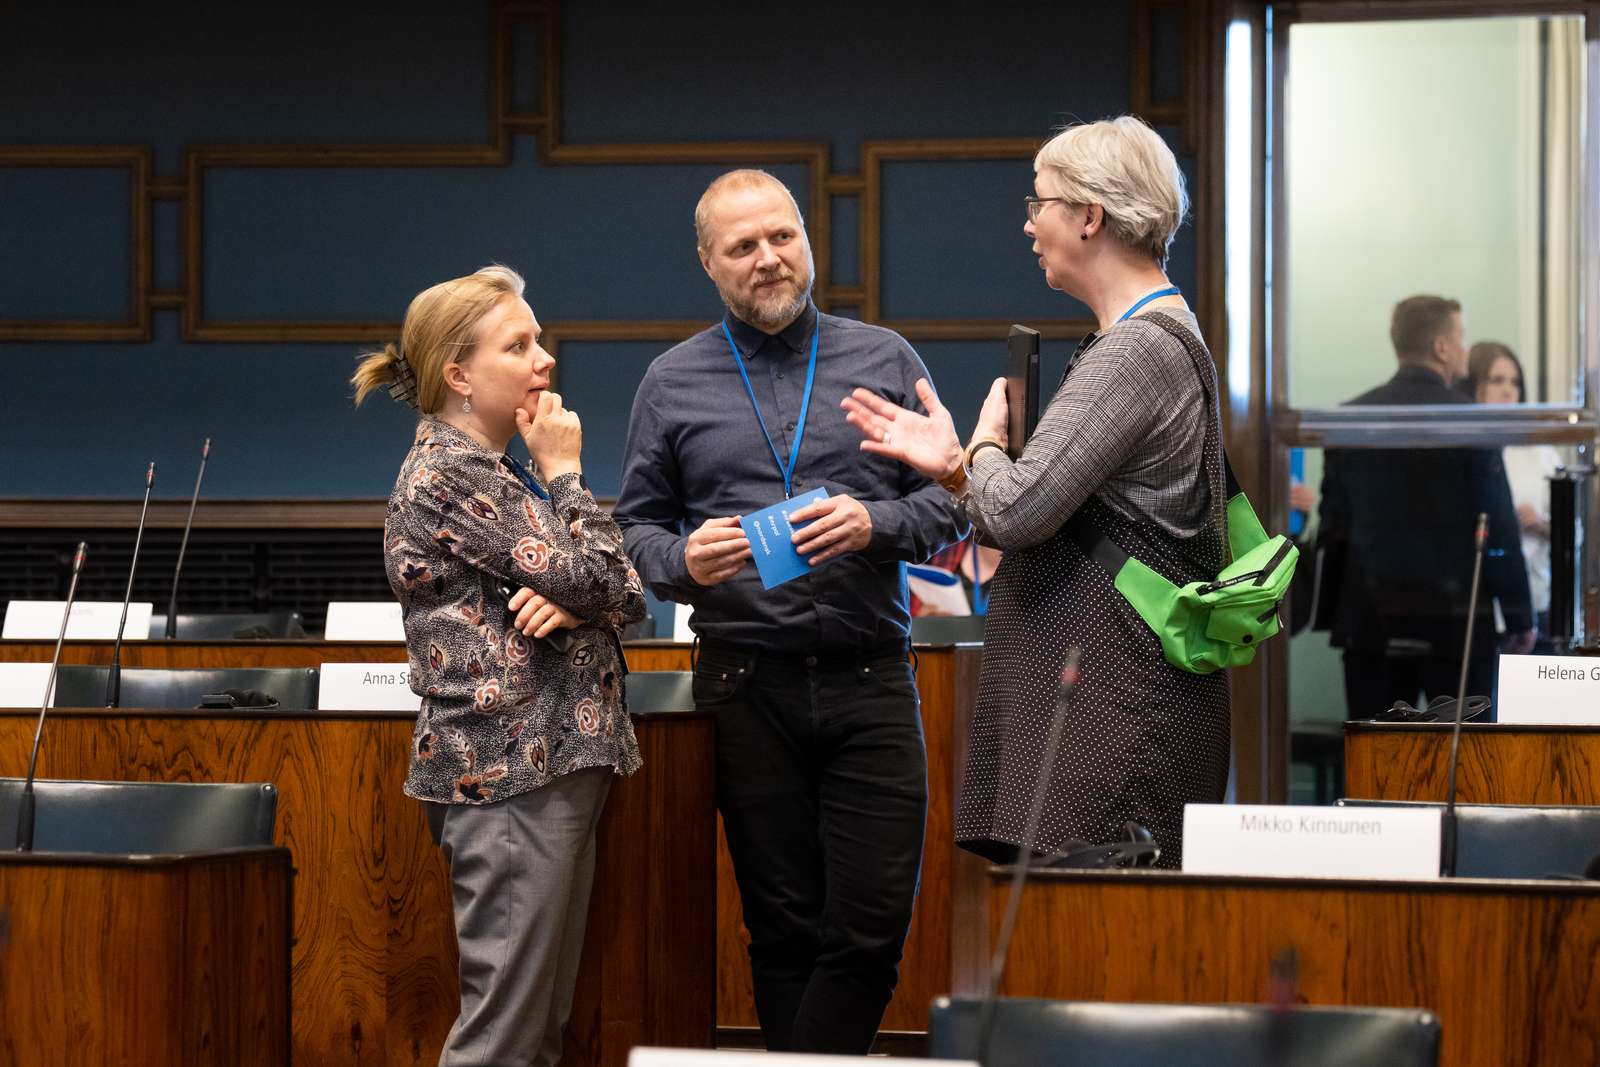 Interpreters at Nordic Council Session 2022